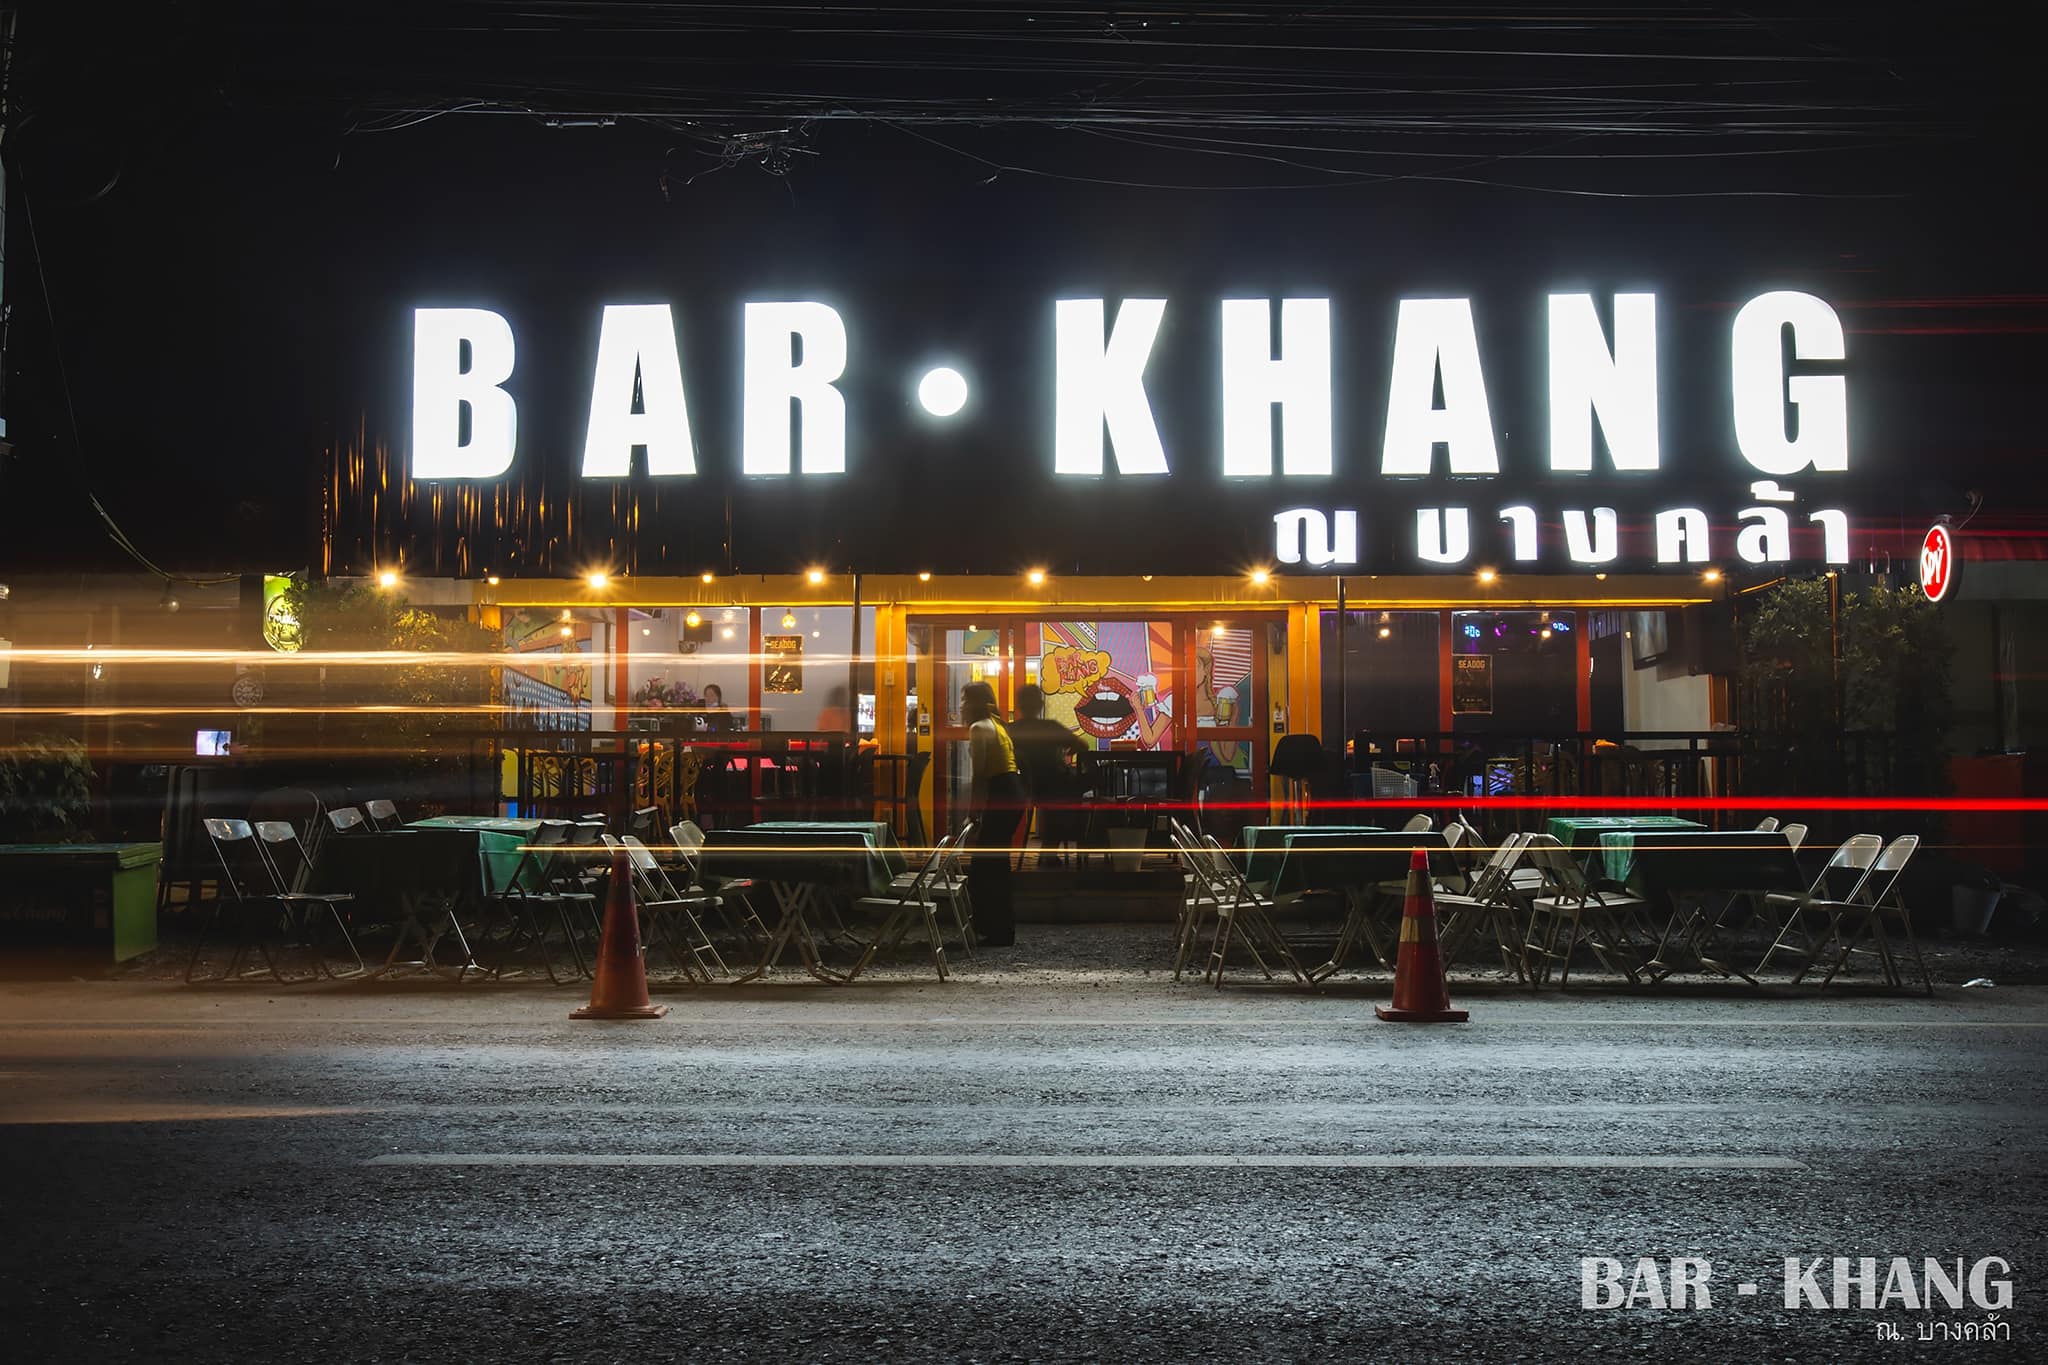 Bar Khang (บาร์ค้าง ณ บางคล้า) : Chachoengsao (ฉะเชิงเทรา)